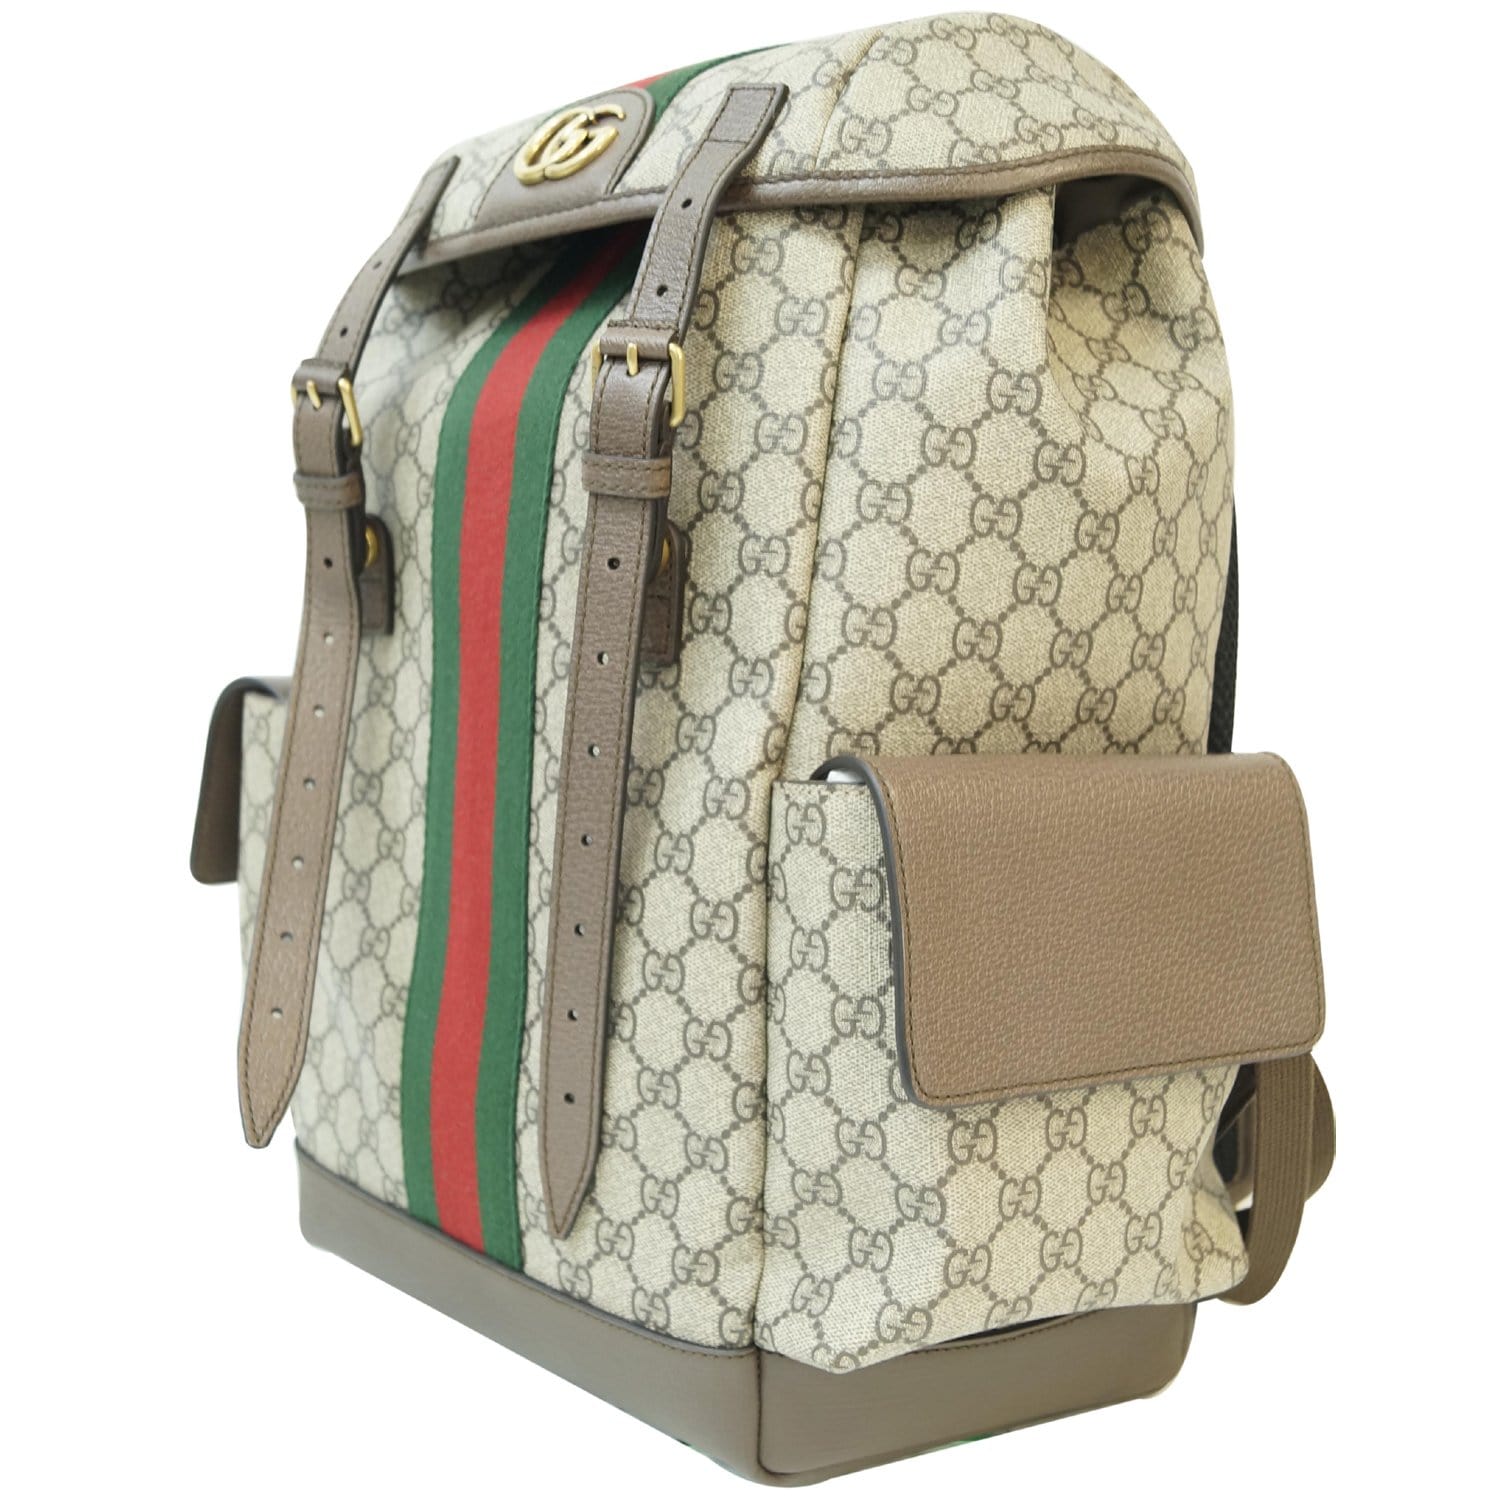 Gucci Backpack Medium GG Supreme Canvas Beige/Ebony in